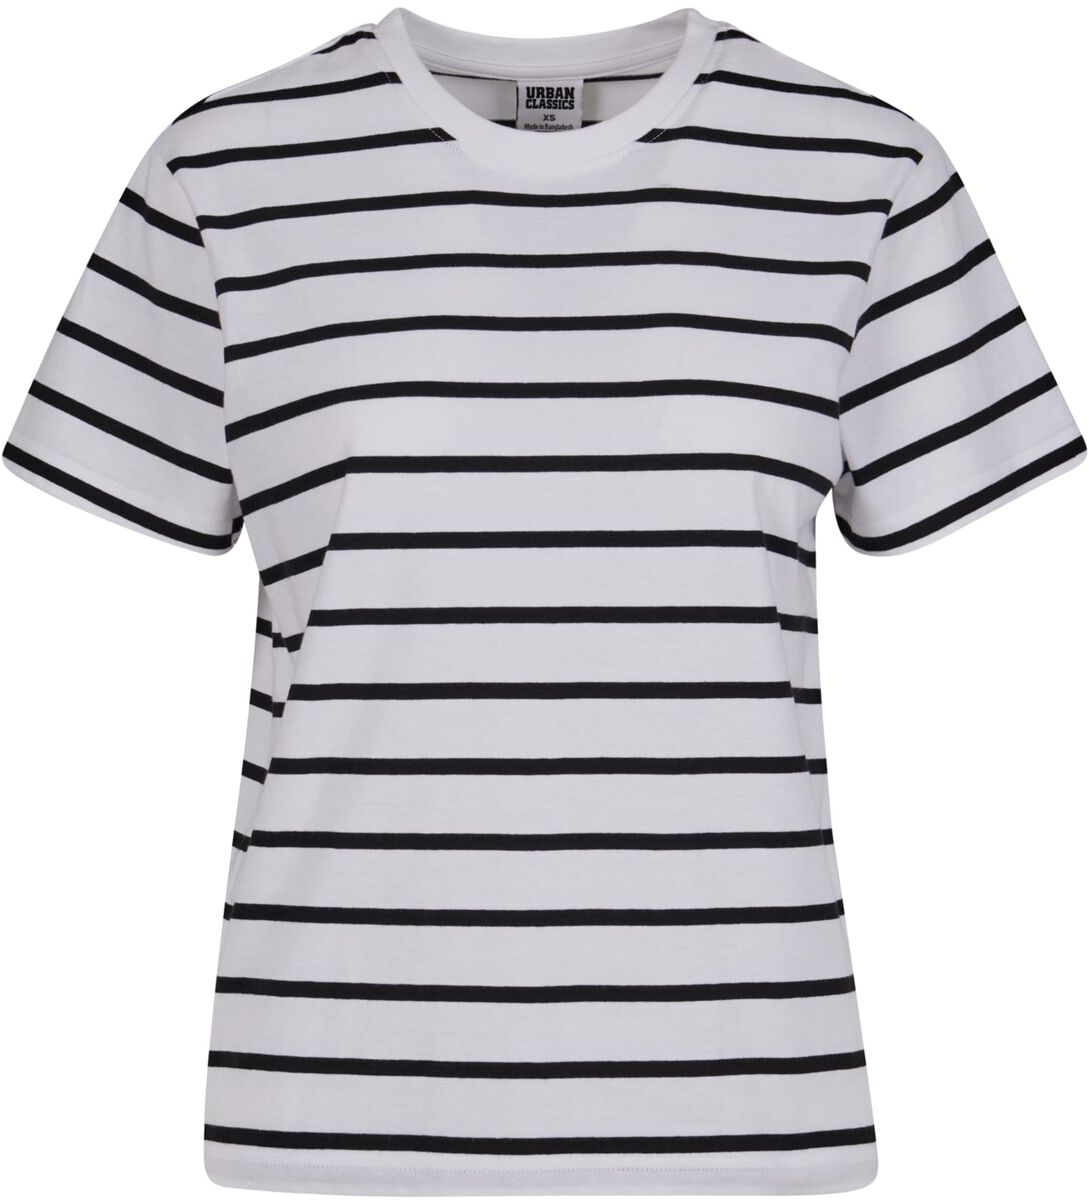 Urban Classics Ladies Striped Boxy Tee T-Shirt schwarz weiß in XS